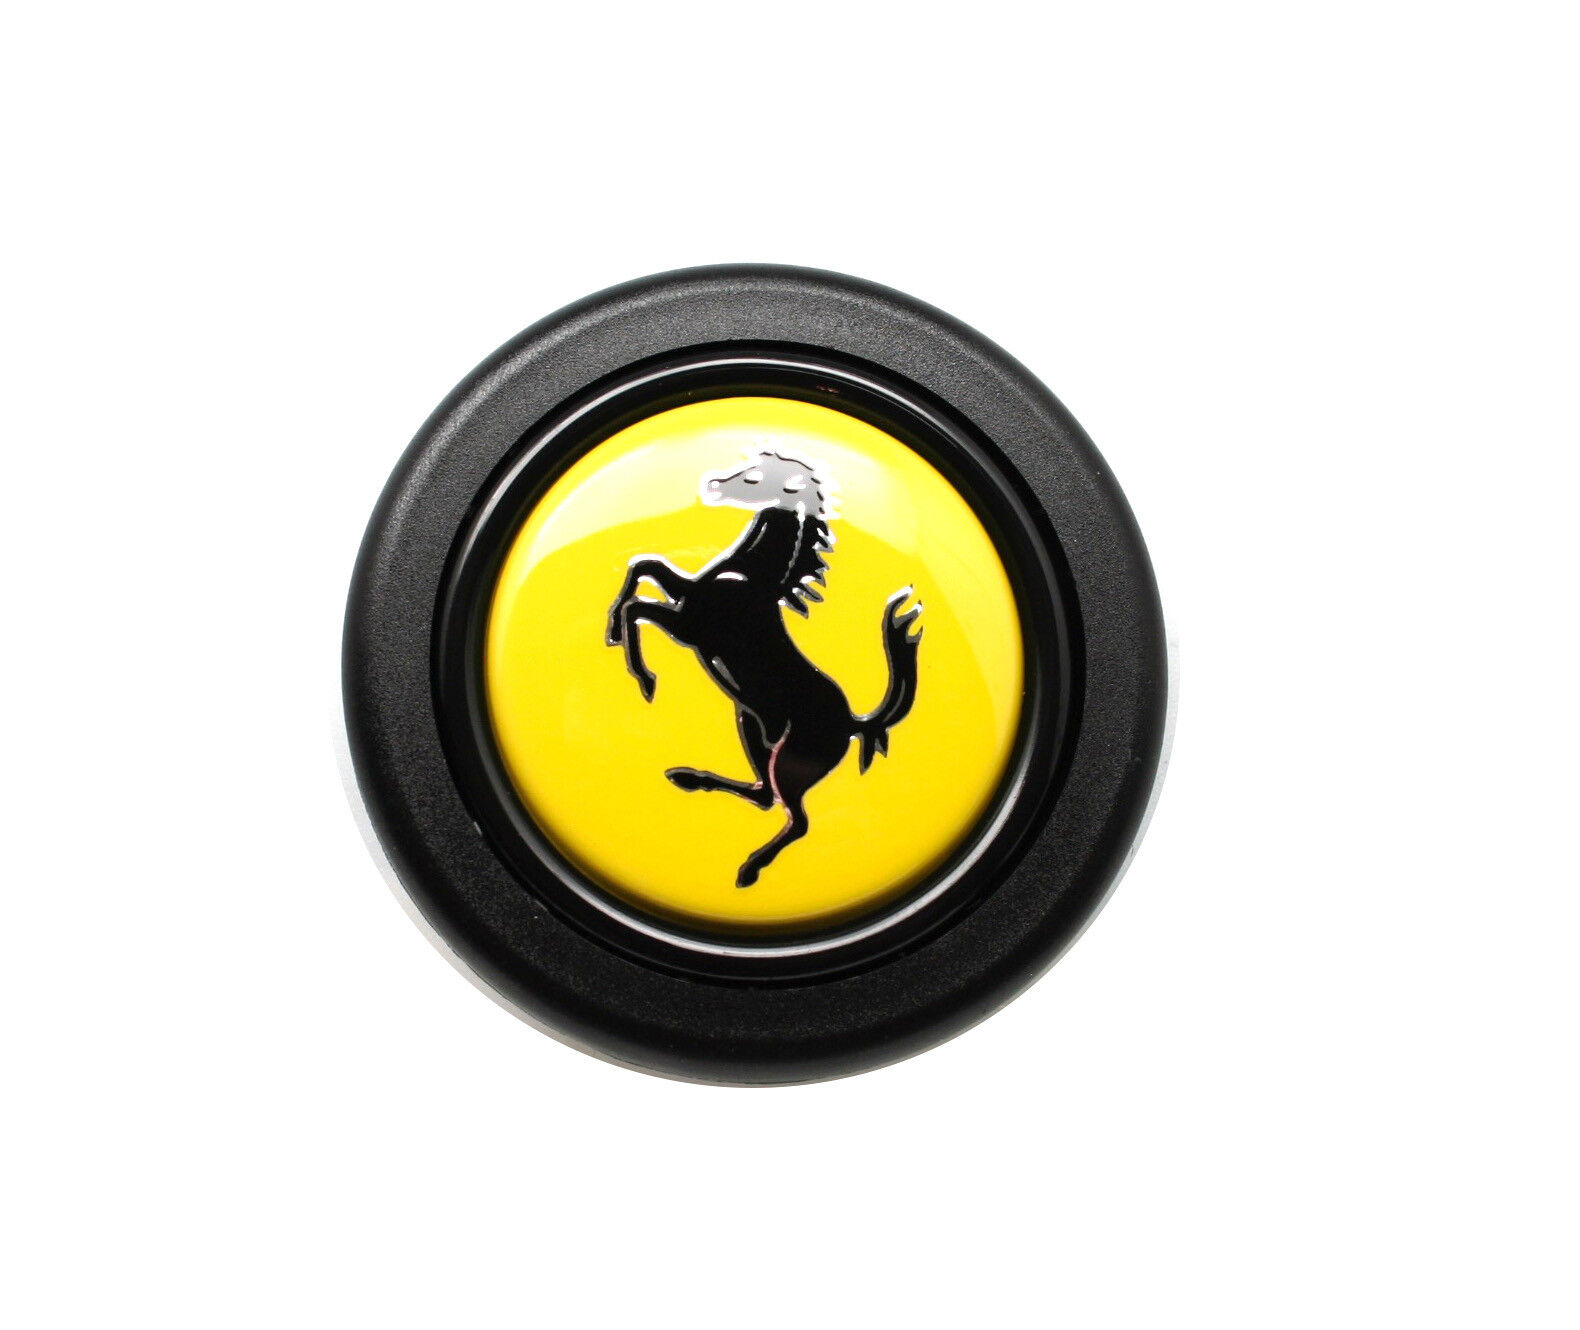 ELETTRO Steering Wheel Horn Button for MOMO OMP With Ferrari Crest 58mm